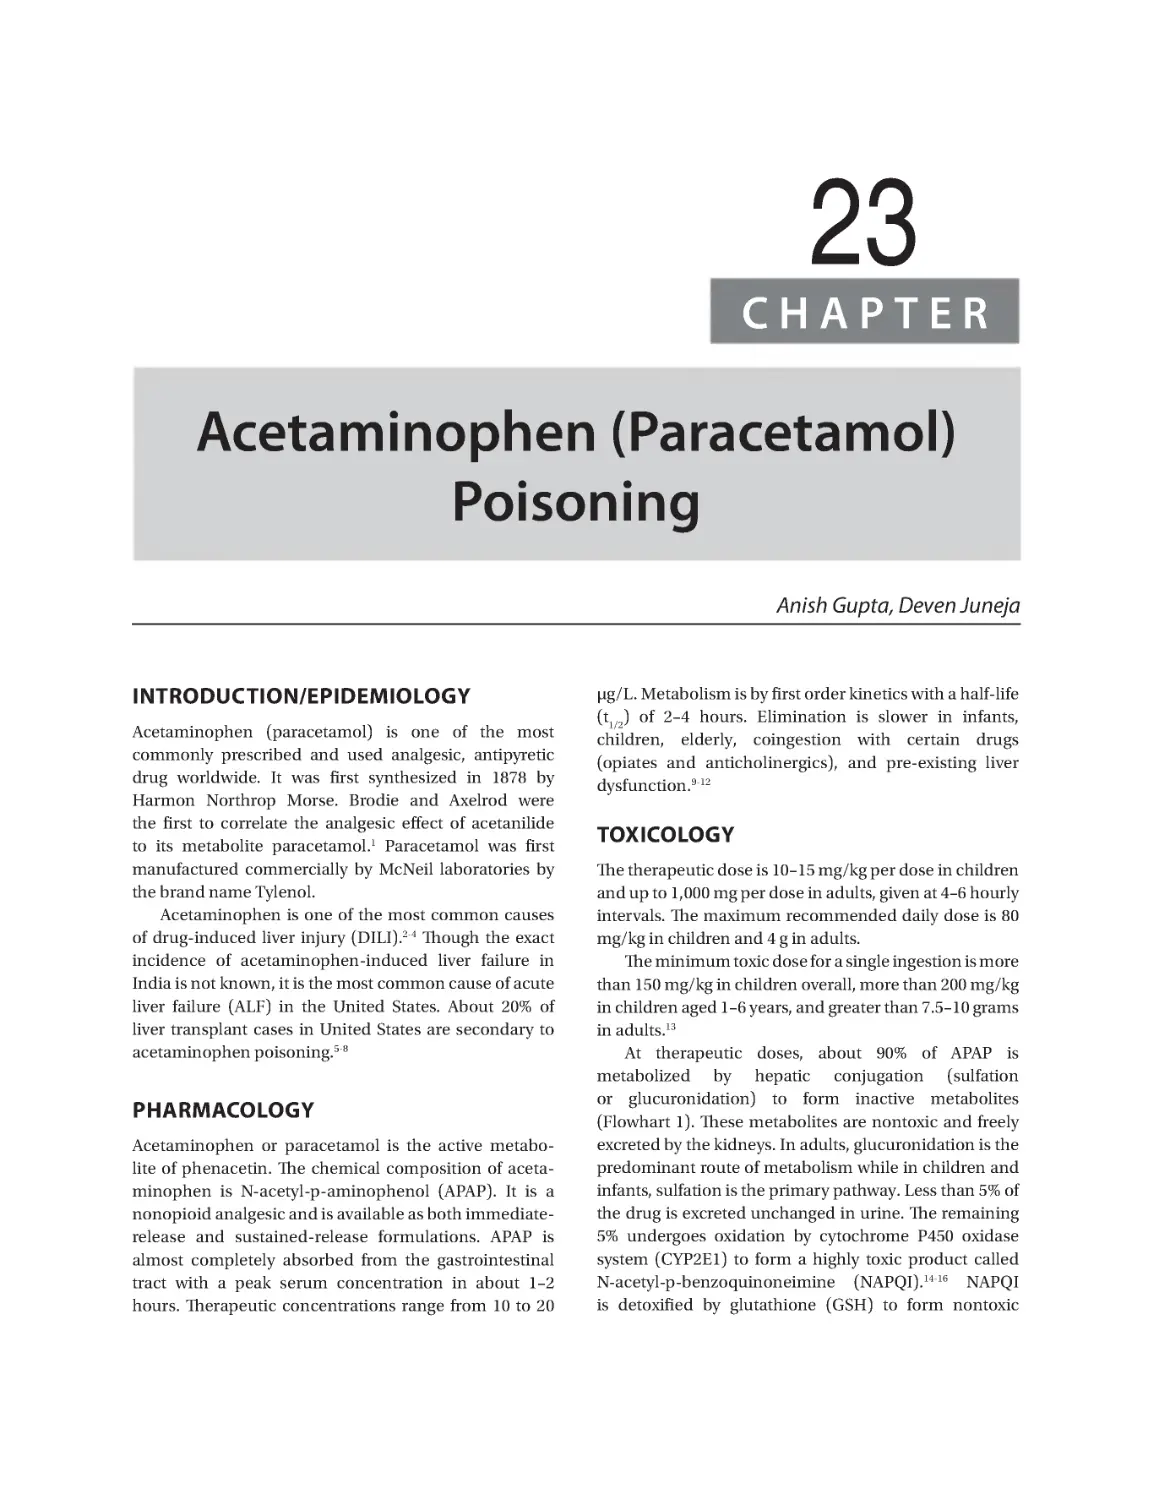 Chapter 23: Acetaminophen øParacetamolù Poisoning